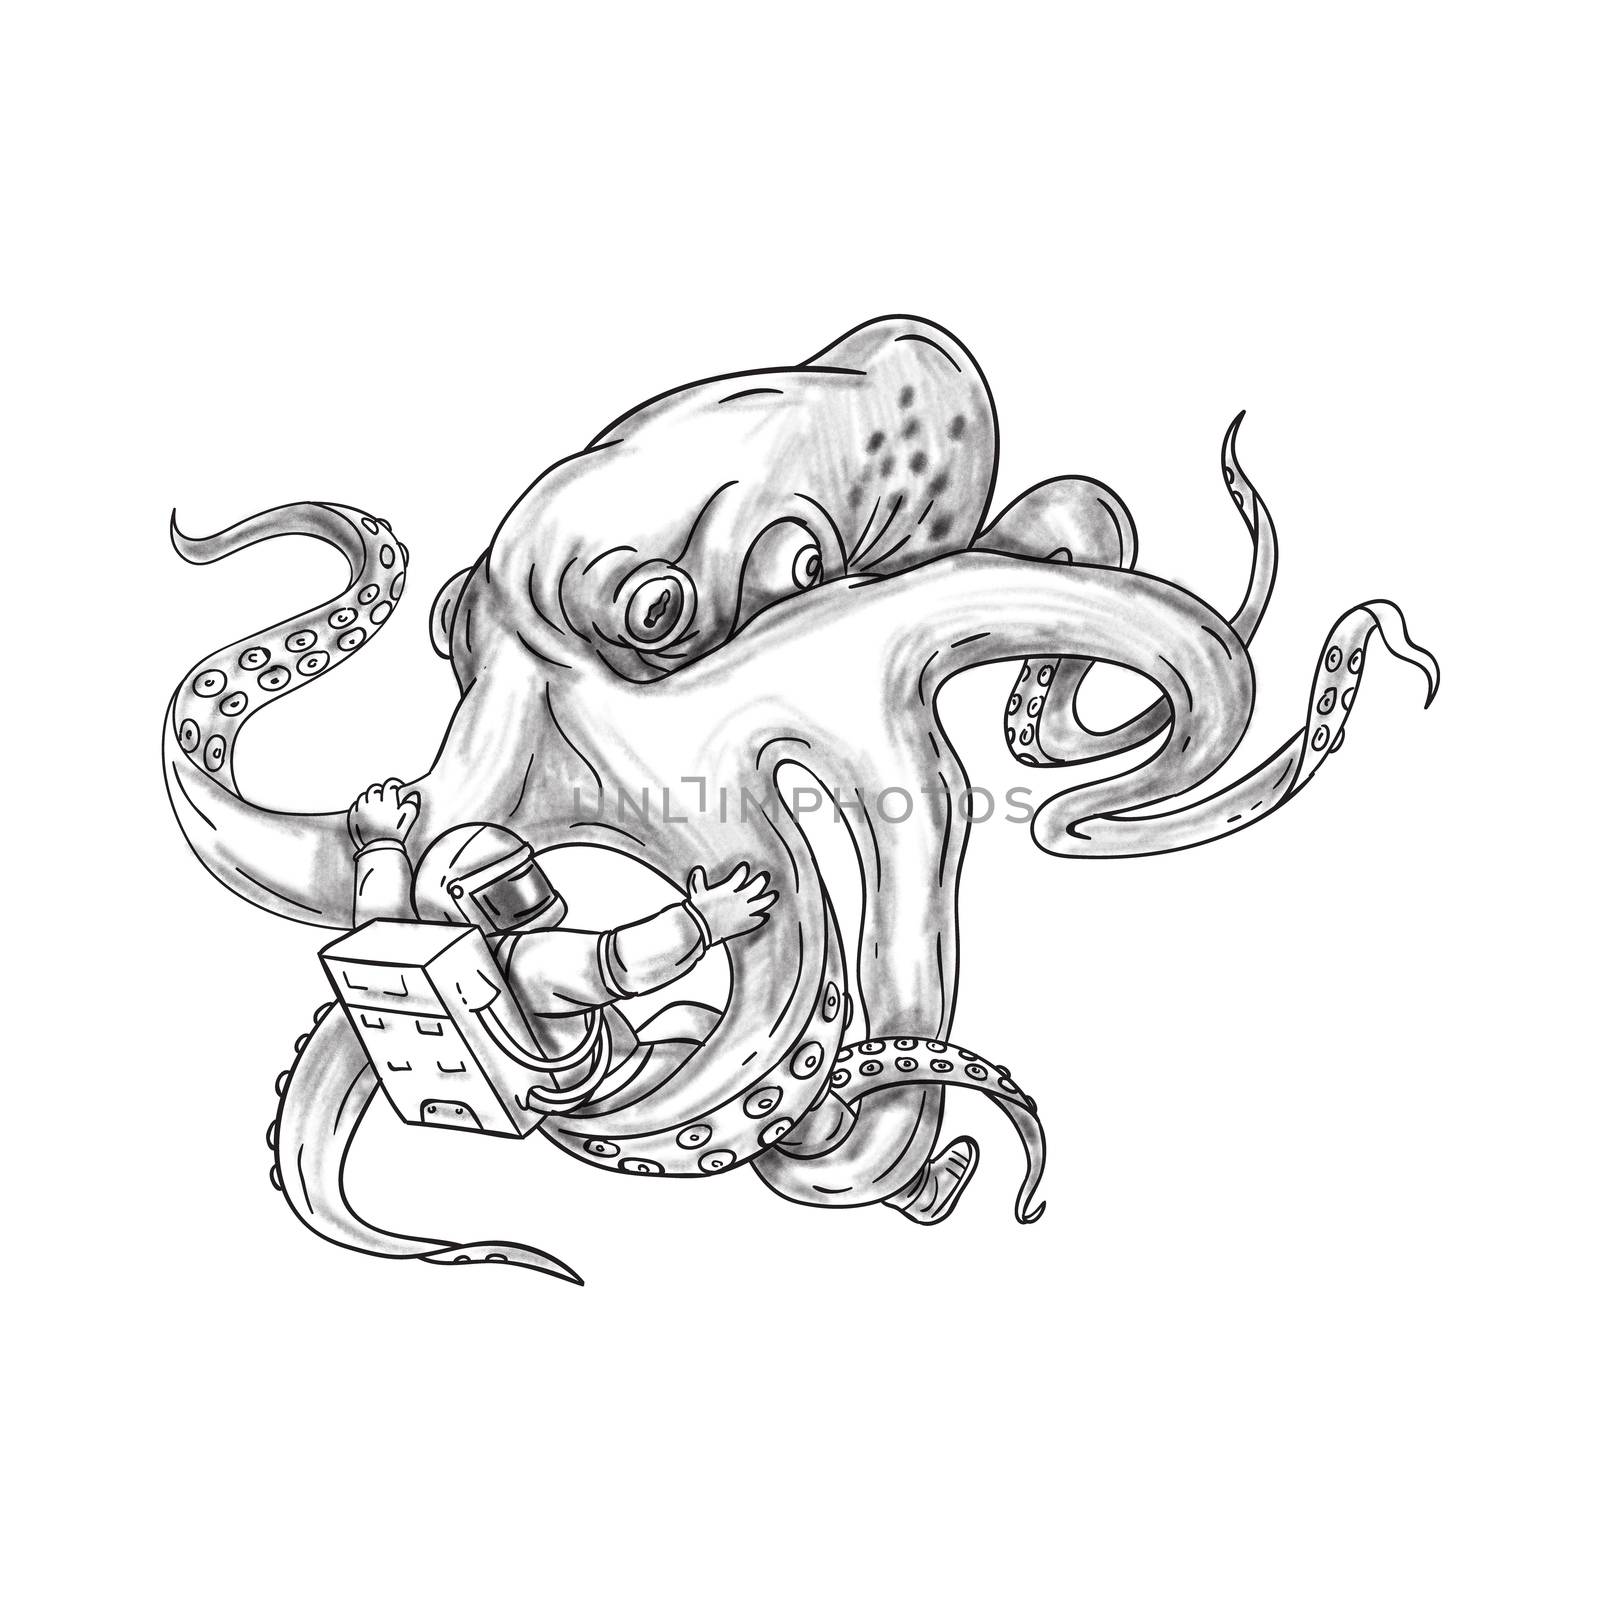 Giant Octopus Fighting Astronaut Tattoo by patrimonio